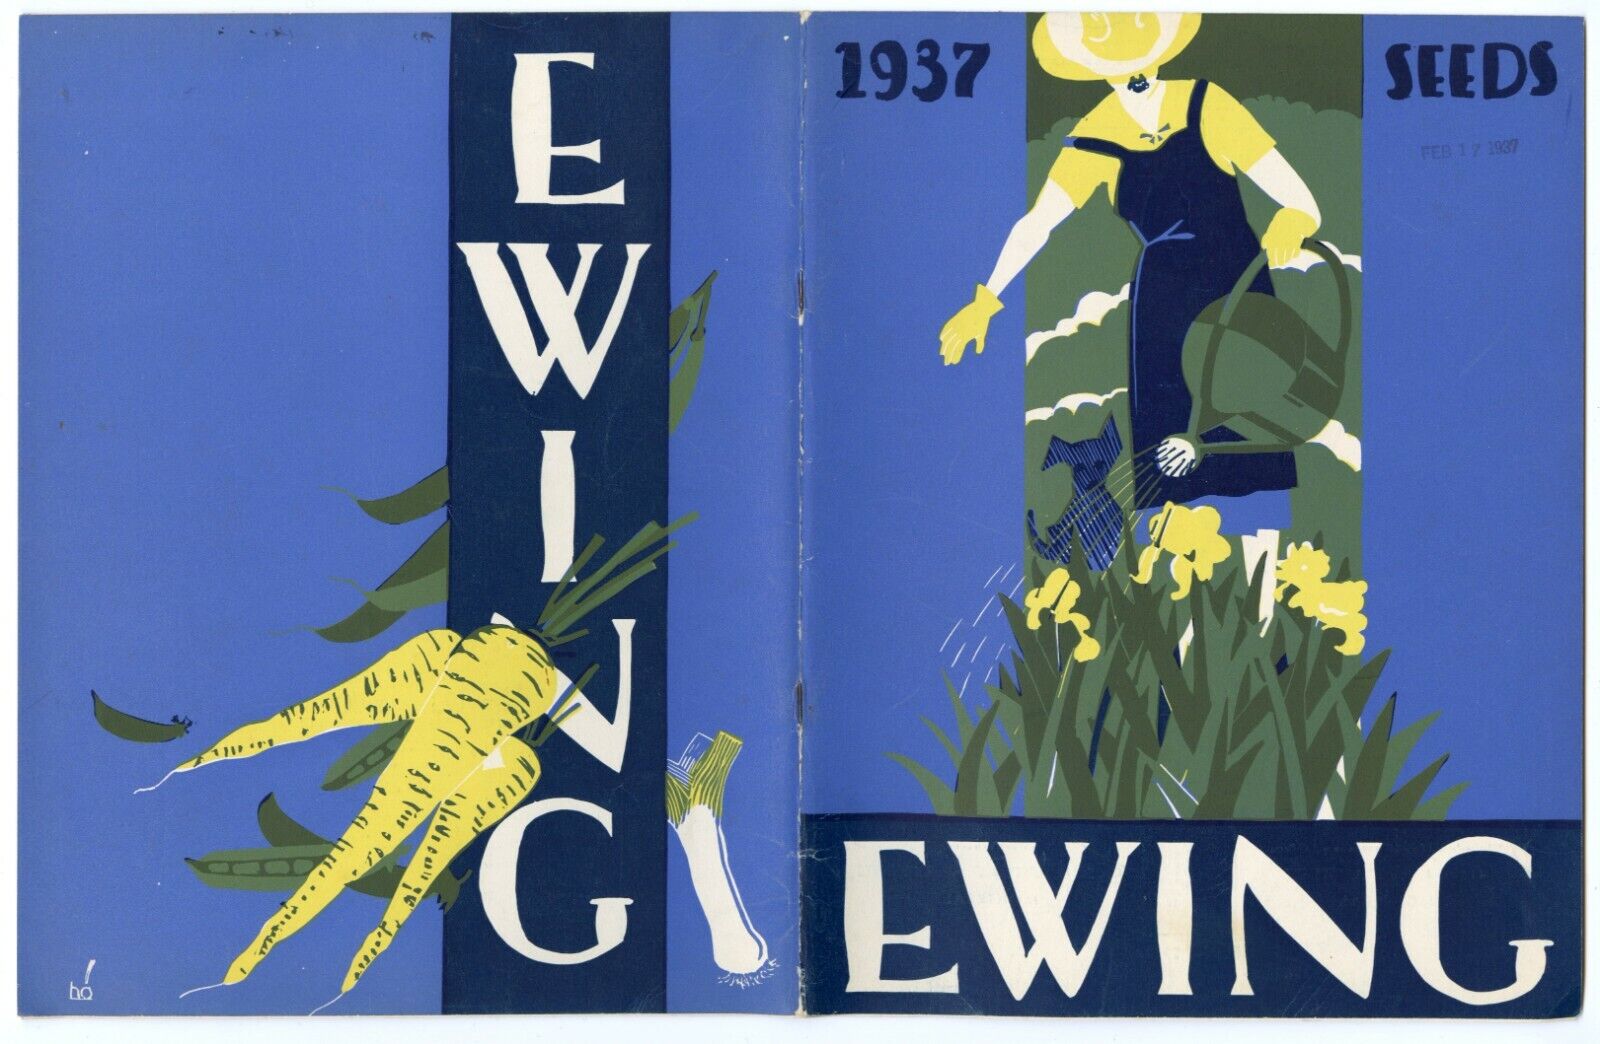 Gorgeous silk screened DEPRESSION DECO Covers EWING SEEDS catalog 1937 Montréal